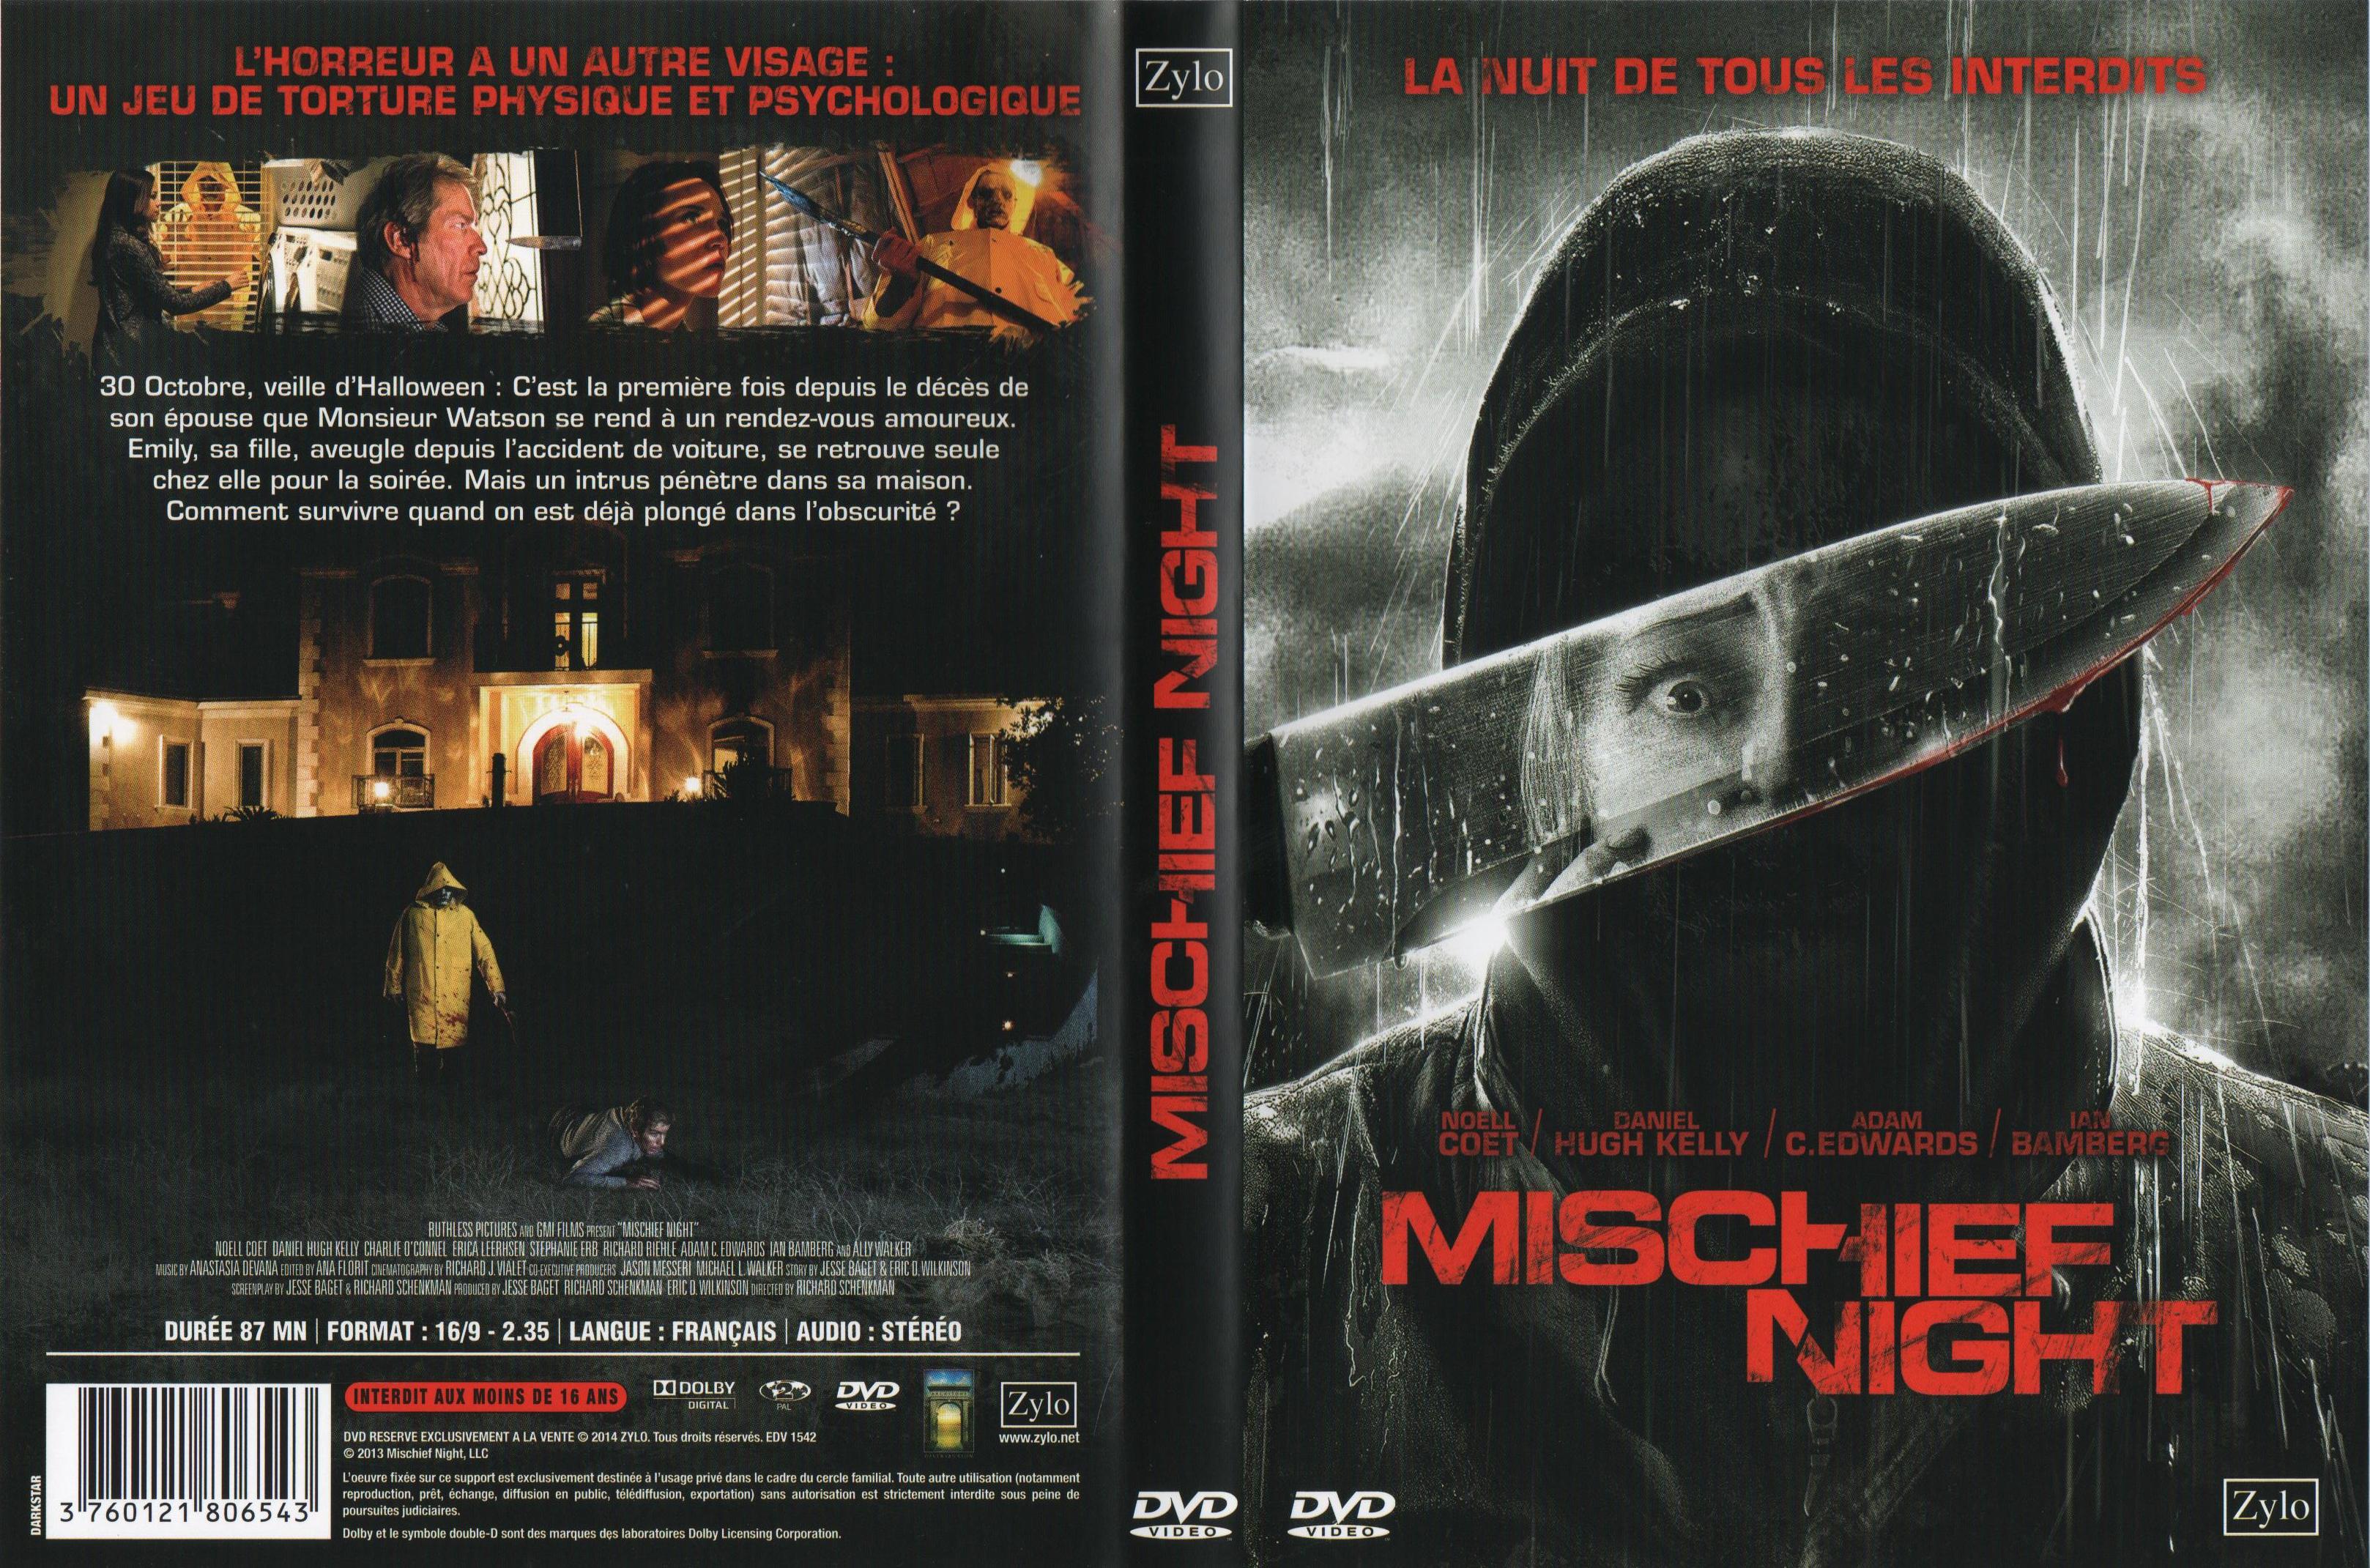 Jaquette DVD Mischief night